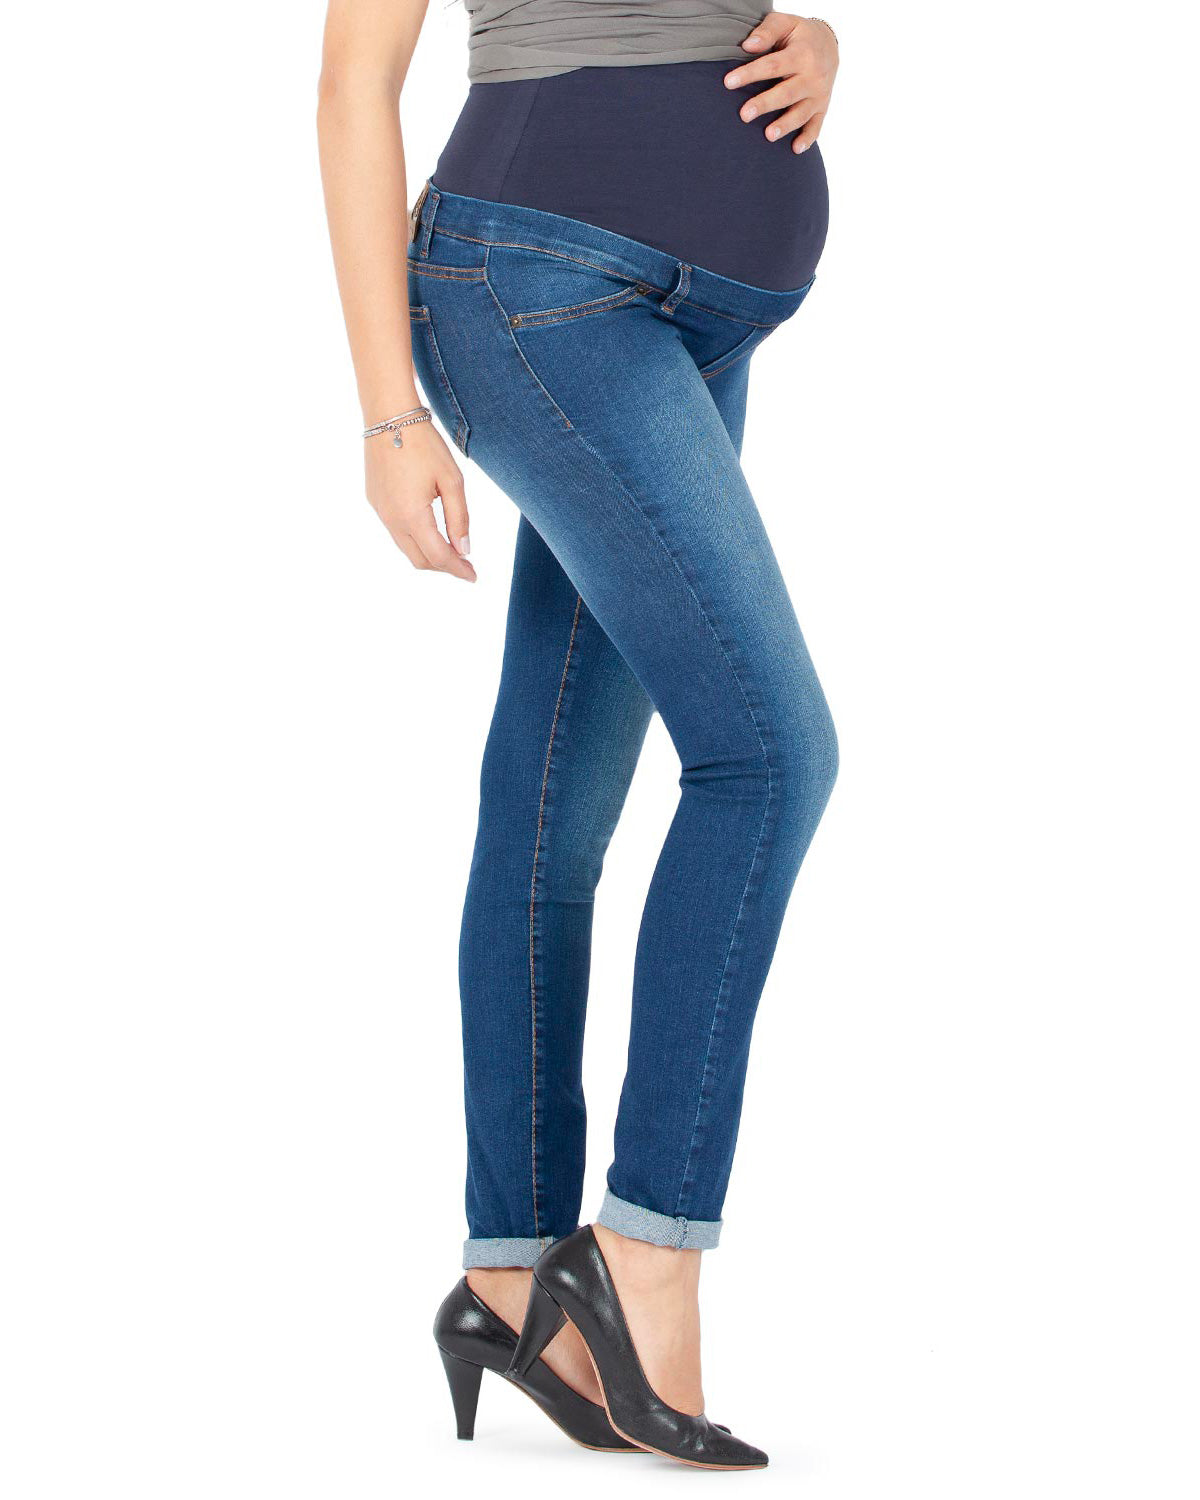 Comodissimo jeans premaman skinny - Designed in Italy